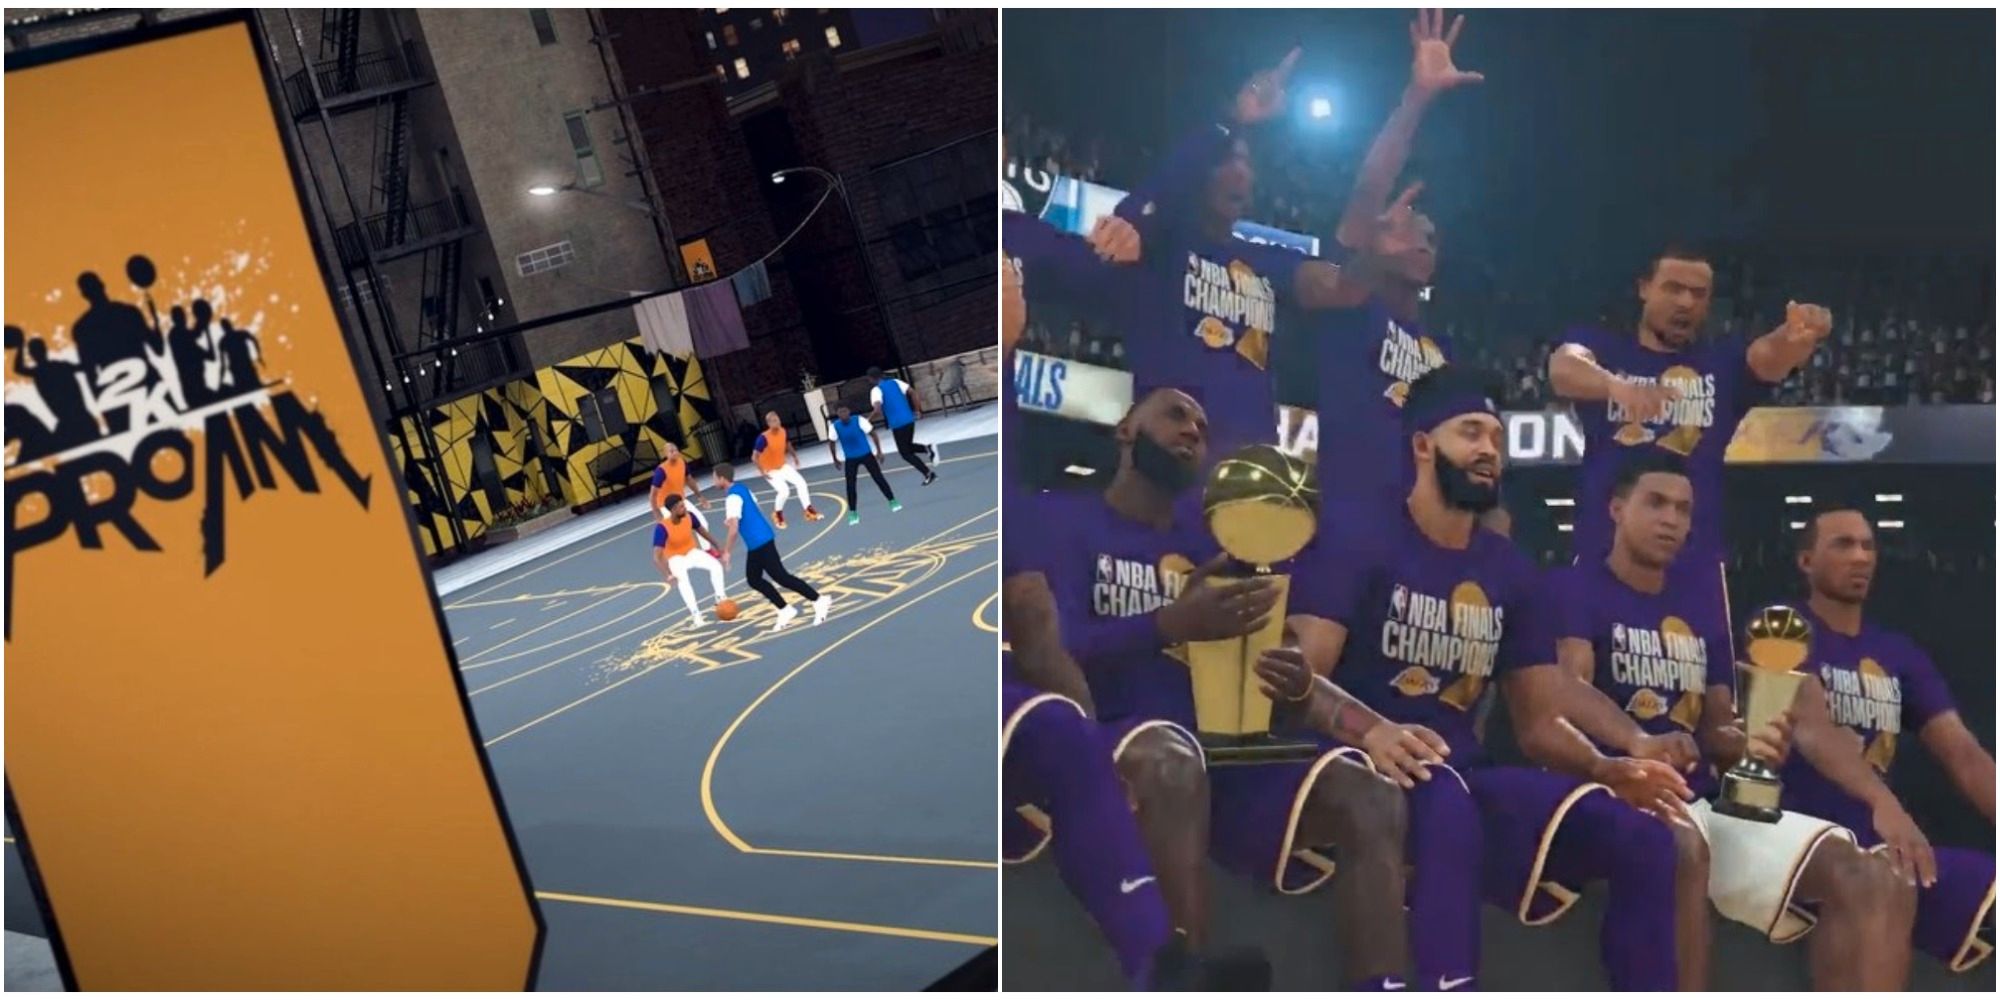 Nba 2k21 Gym Rat Collage Pro Am en Championship Lakers-team